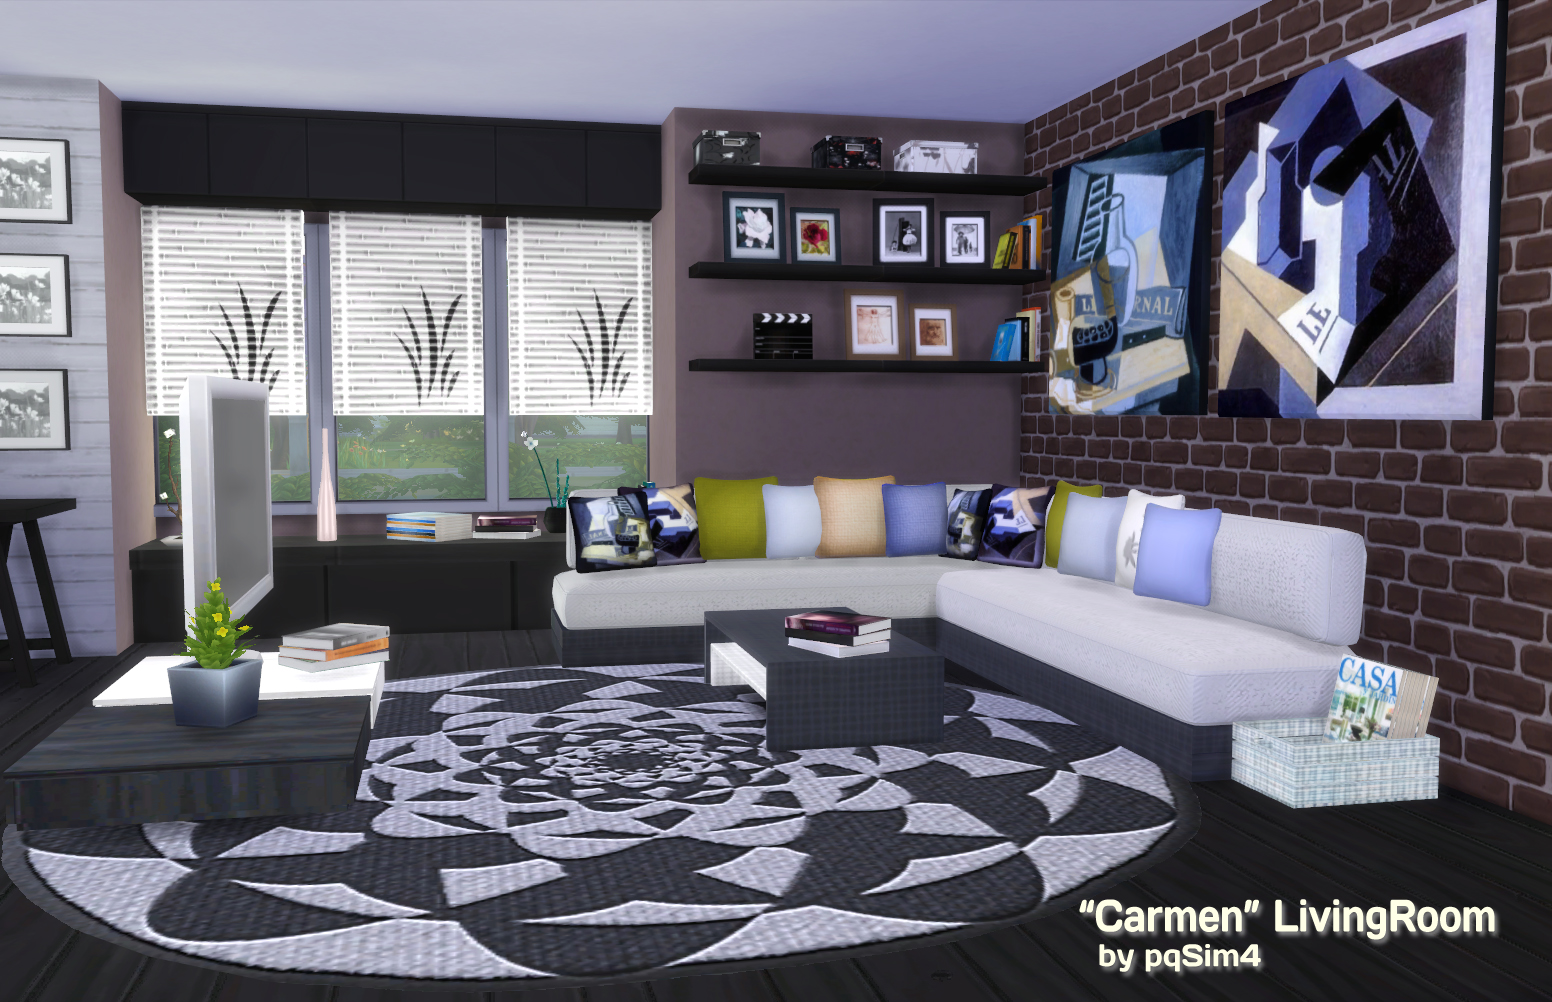 My Sims 4 Blog: Carmen Living Room Set by PqSim4